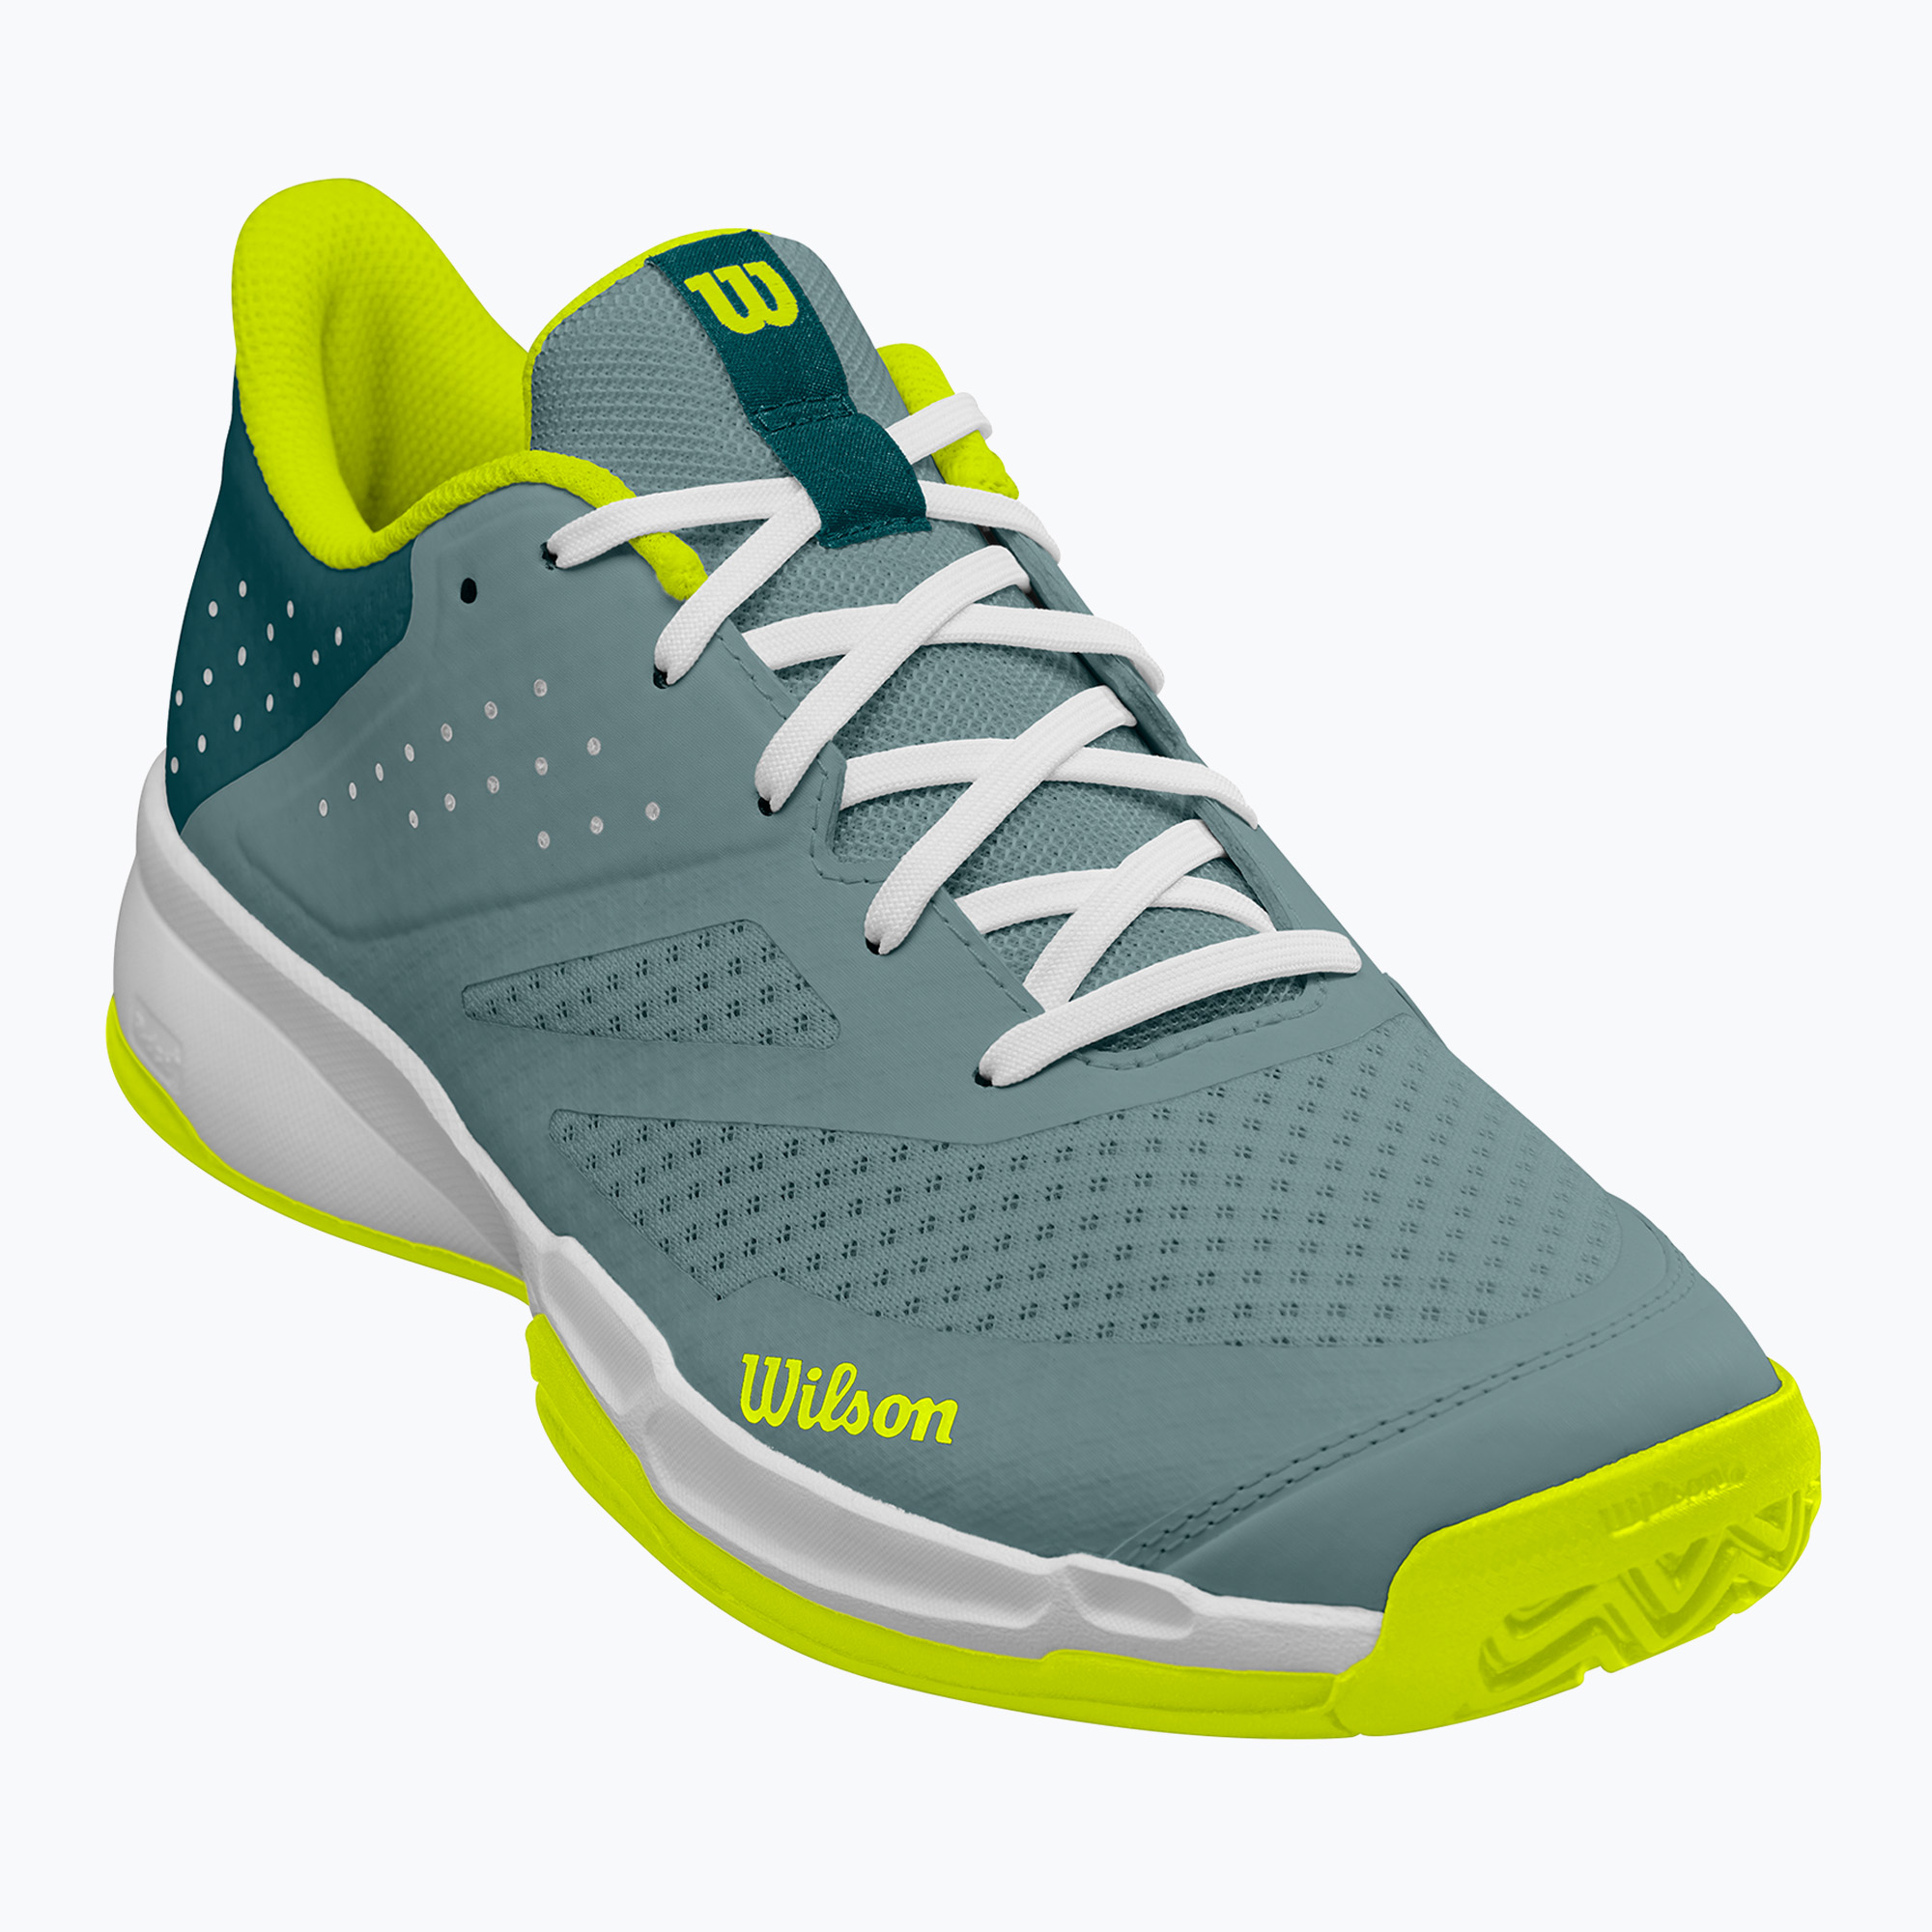 Wilson Kaos Stroke 2.0 мъжки обувки за тенис stormy sea/deep teal/safety yellow